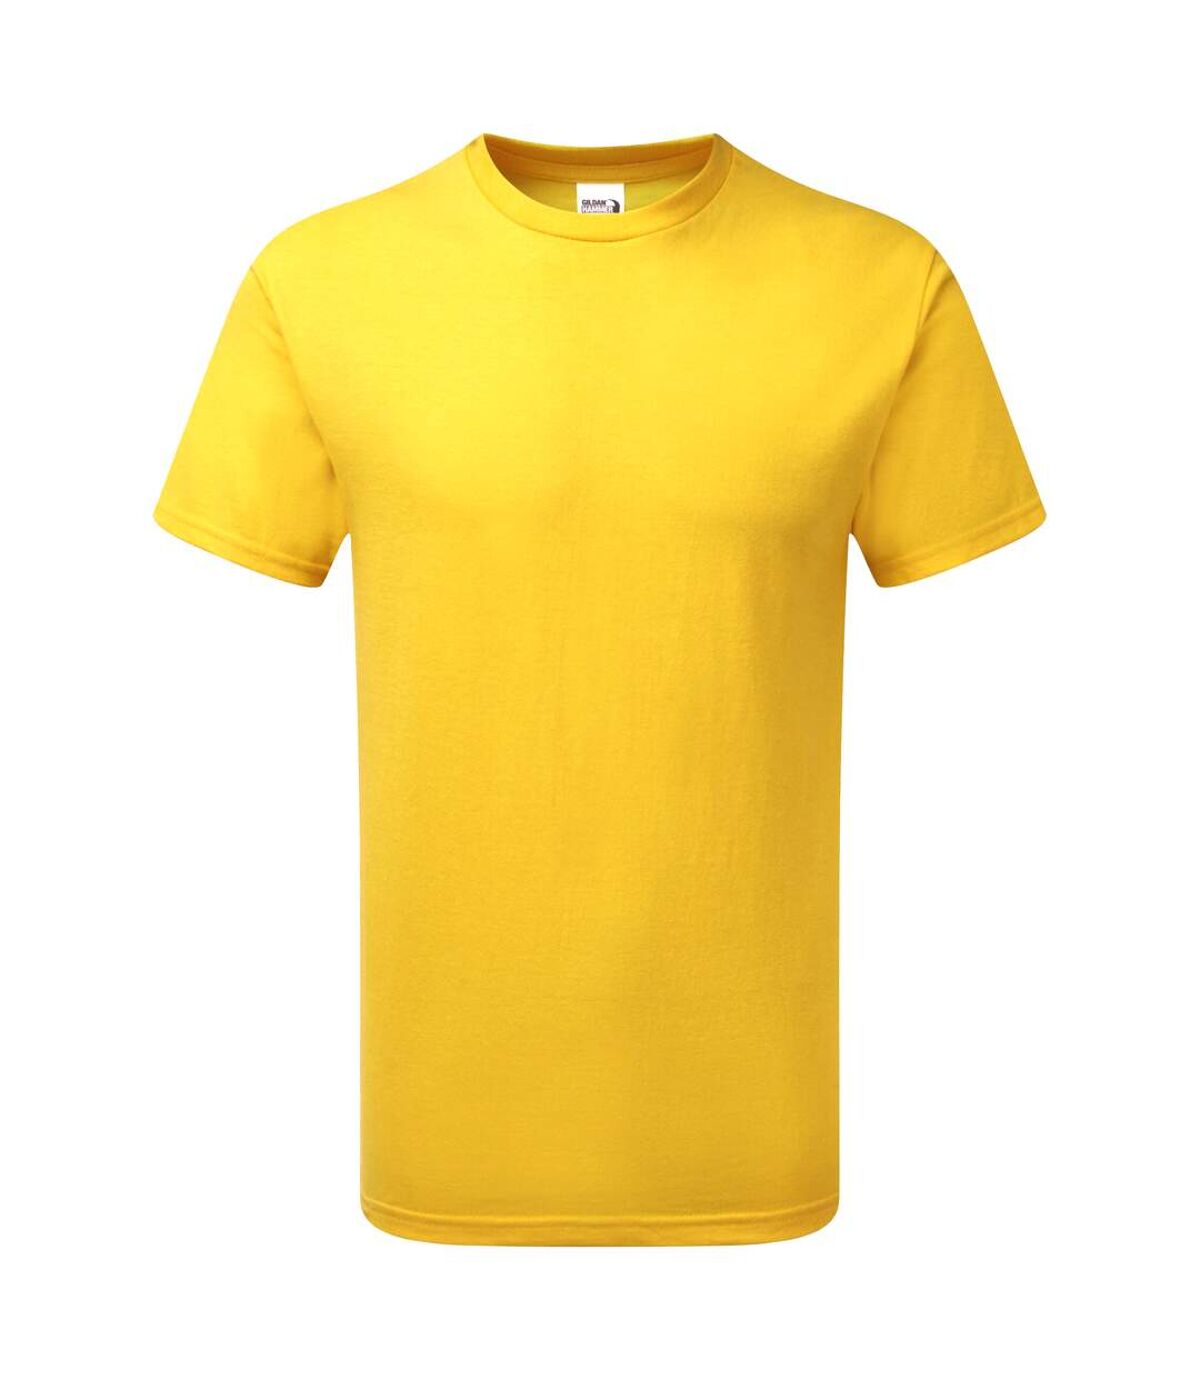 Gildan - T-shirt HAMMER - Homme (Jaune) - UTPC3067